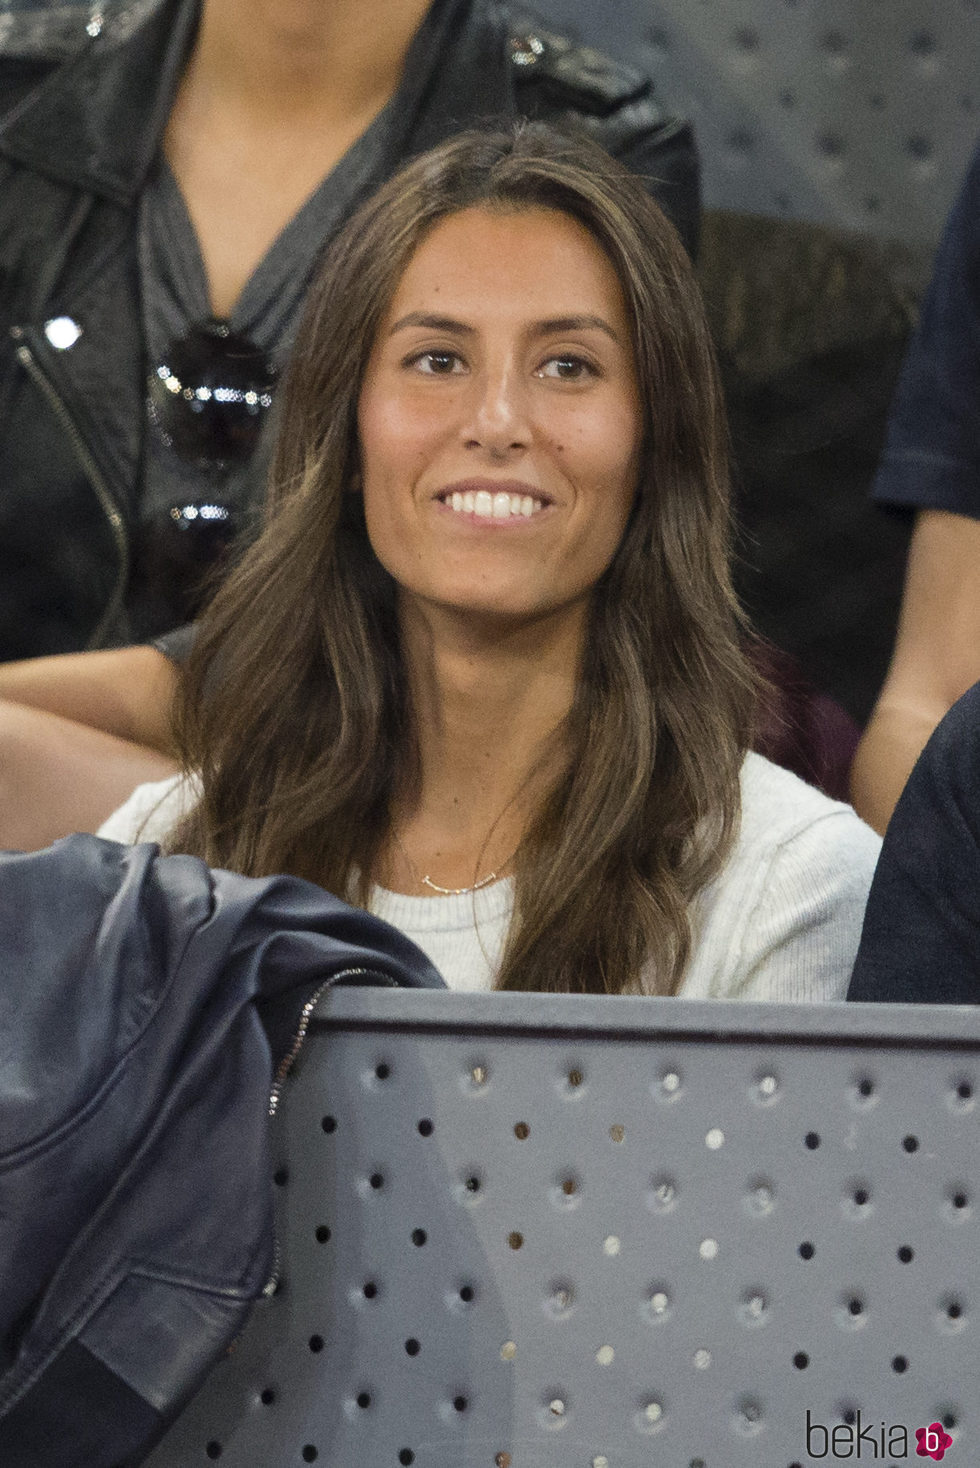 Ana Boyer apoya a Fernando Verdasco durante su partido de tenis